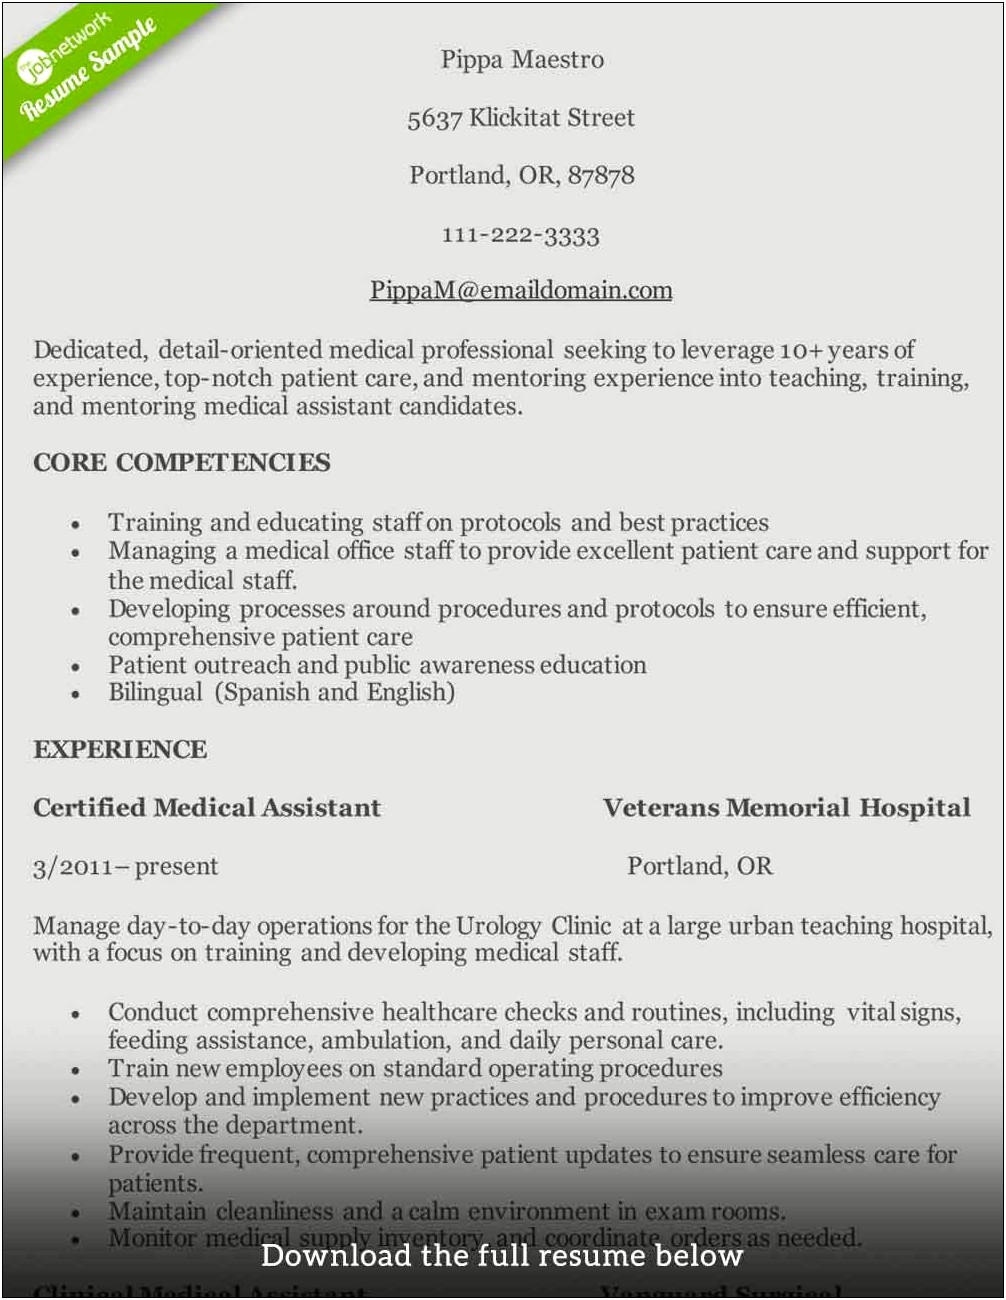 Sample Resume In The Healthcare Field